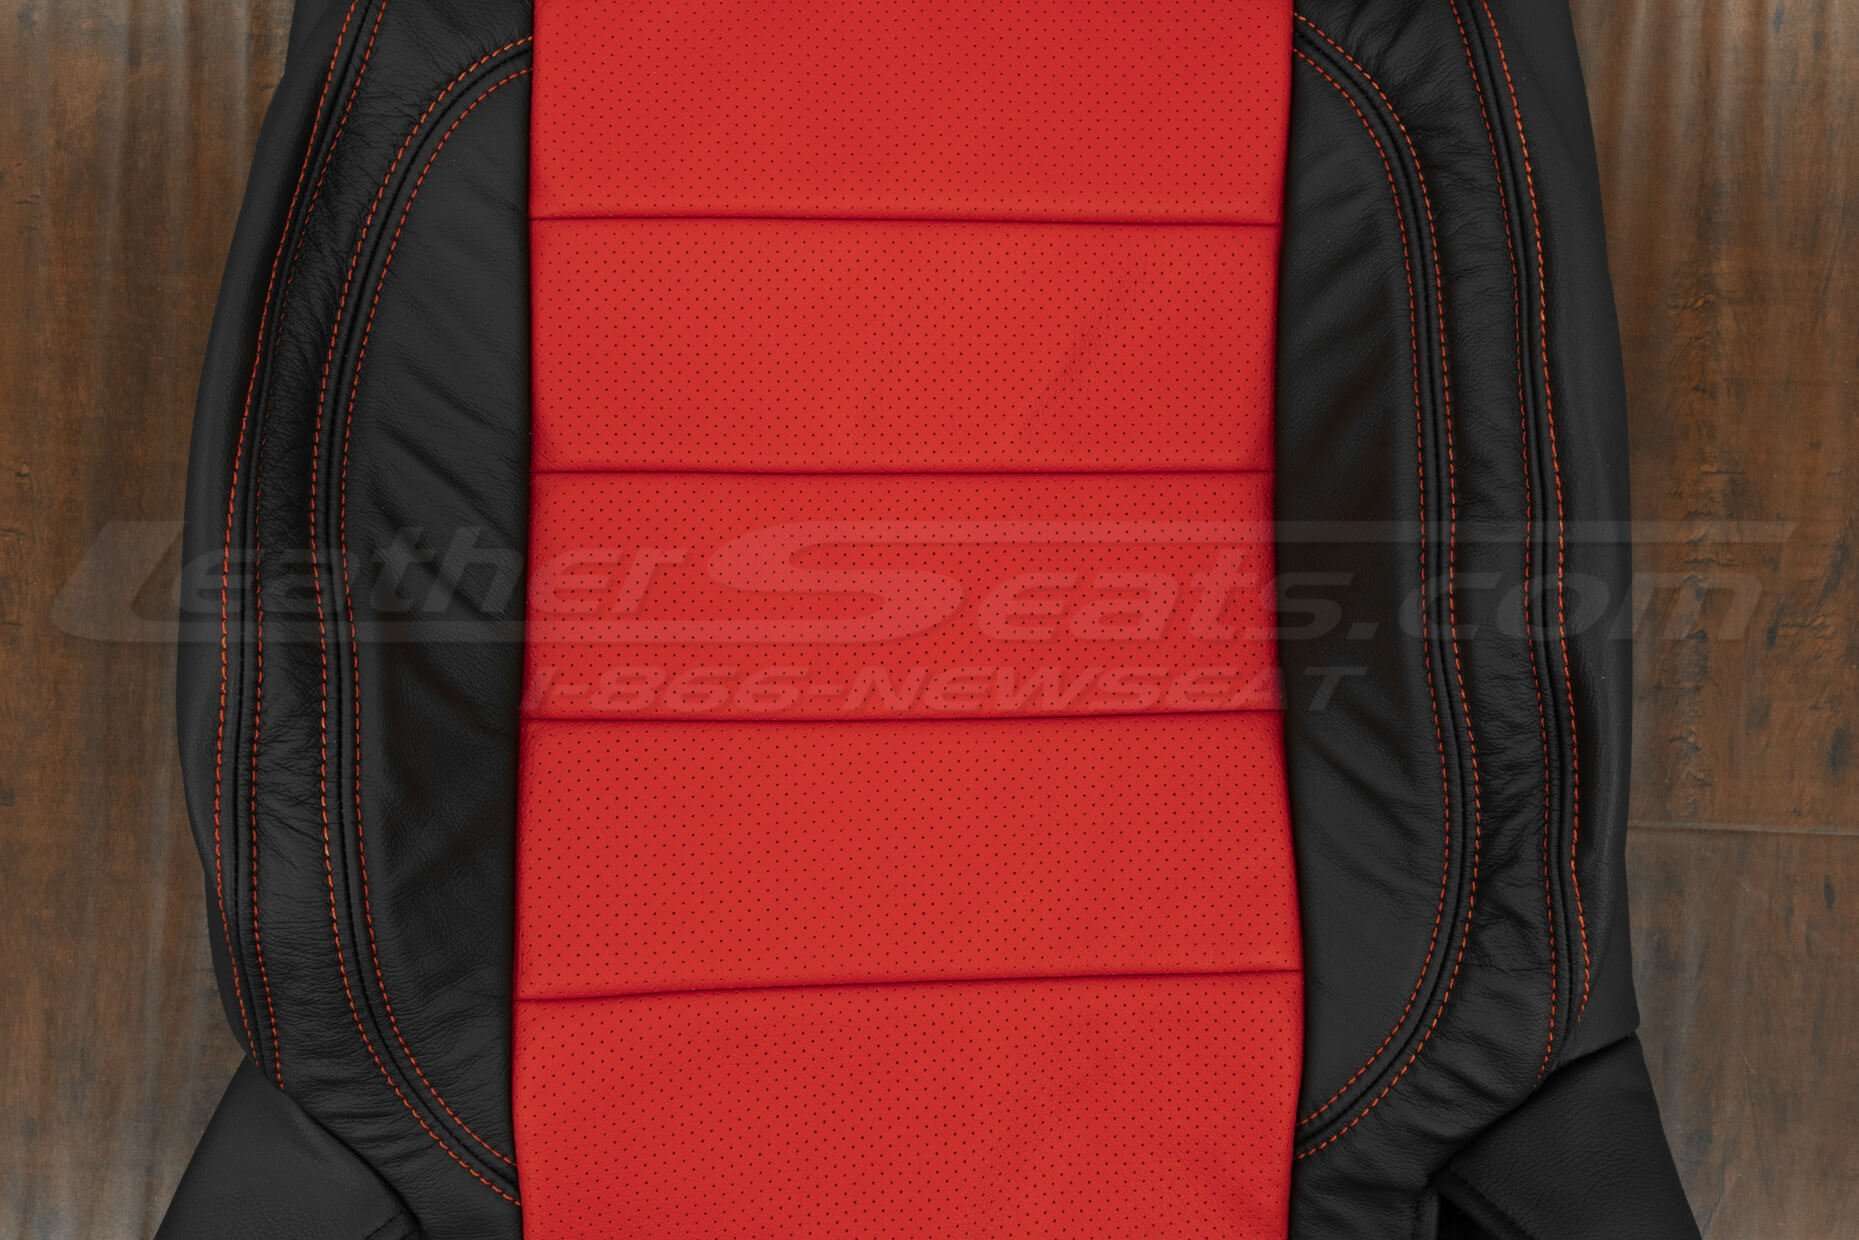 07-10 Jeep Wrangler Upholstery Kit - Black / Bright Red - Backrest perforated insert